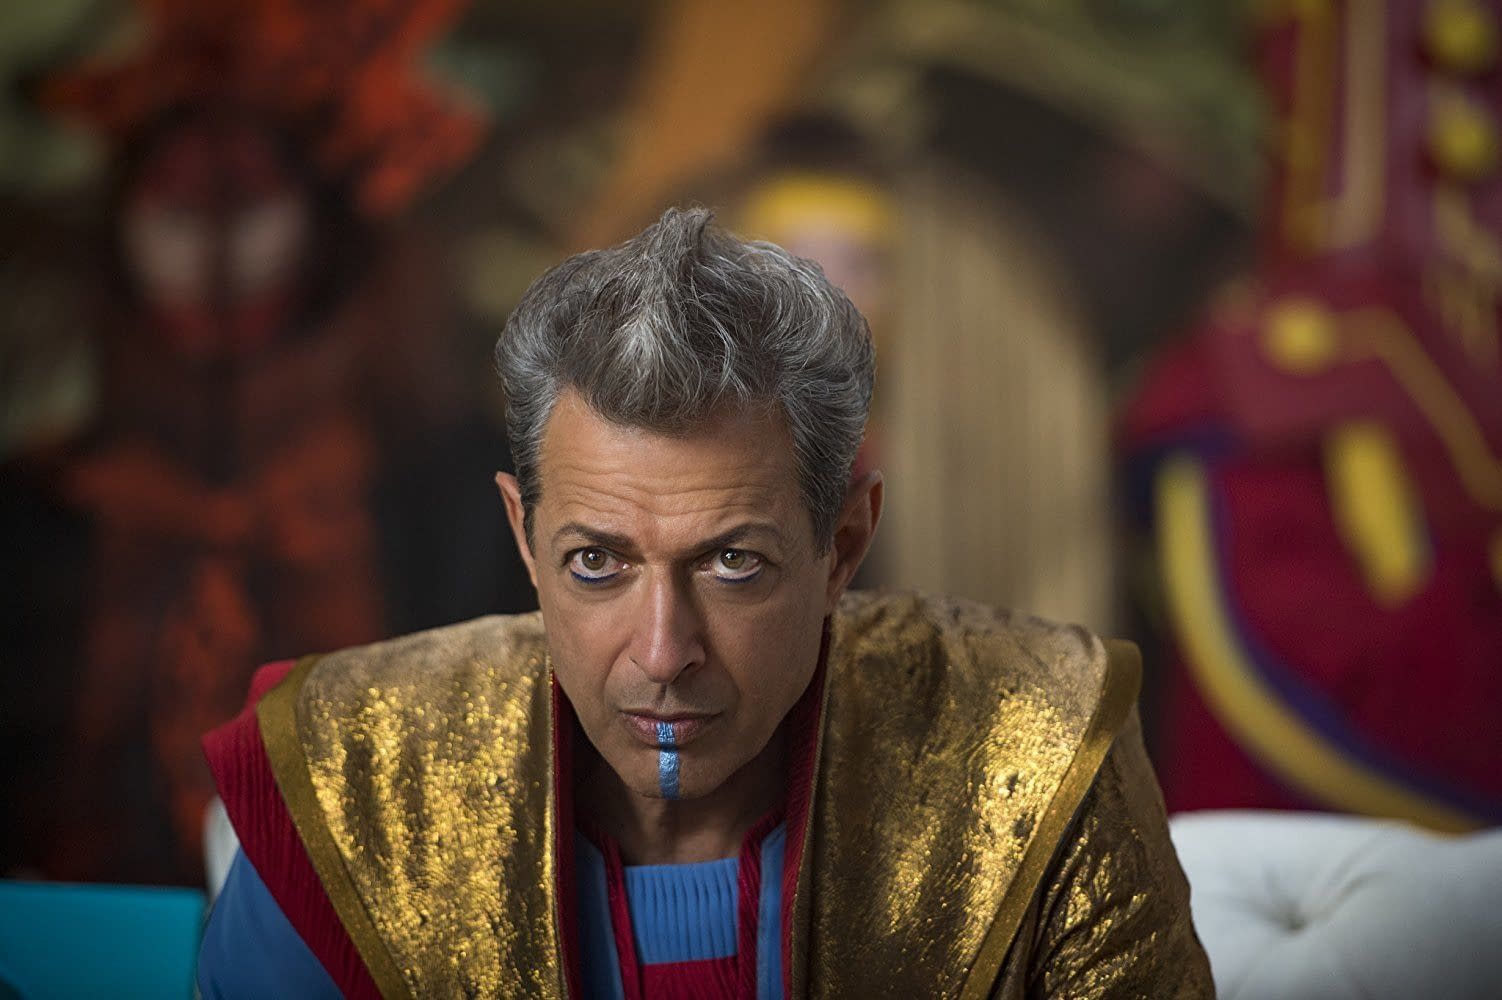 Avengers: Infinity War - Grandmaster is still alive, says Jeff Goldblum